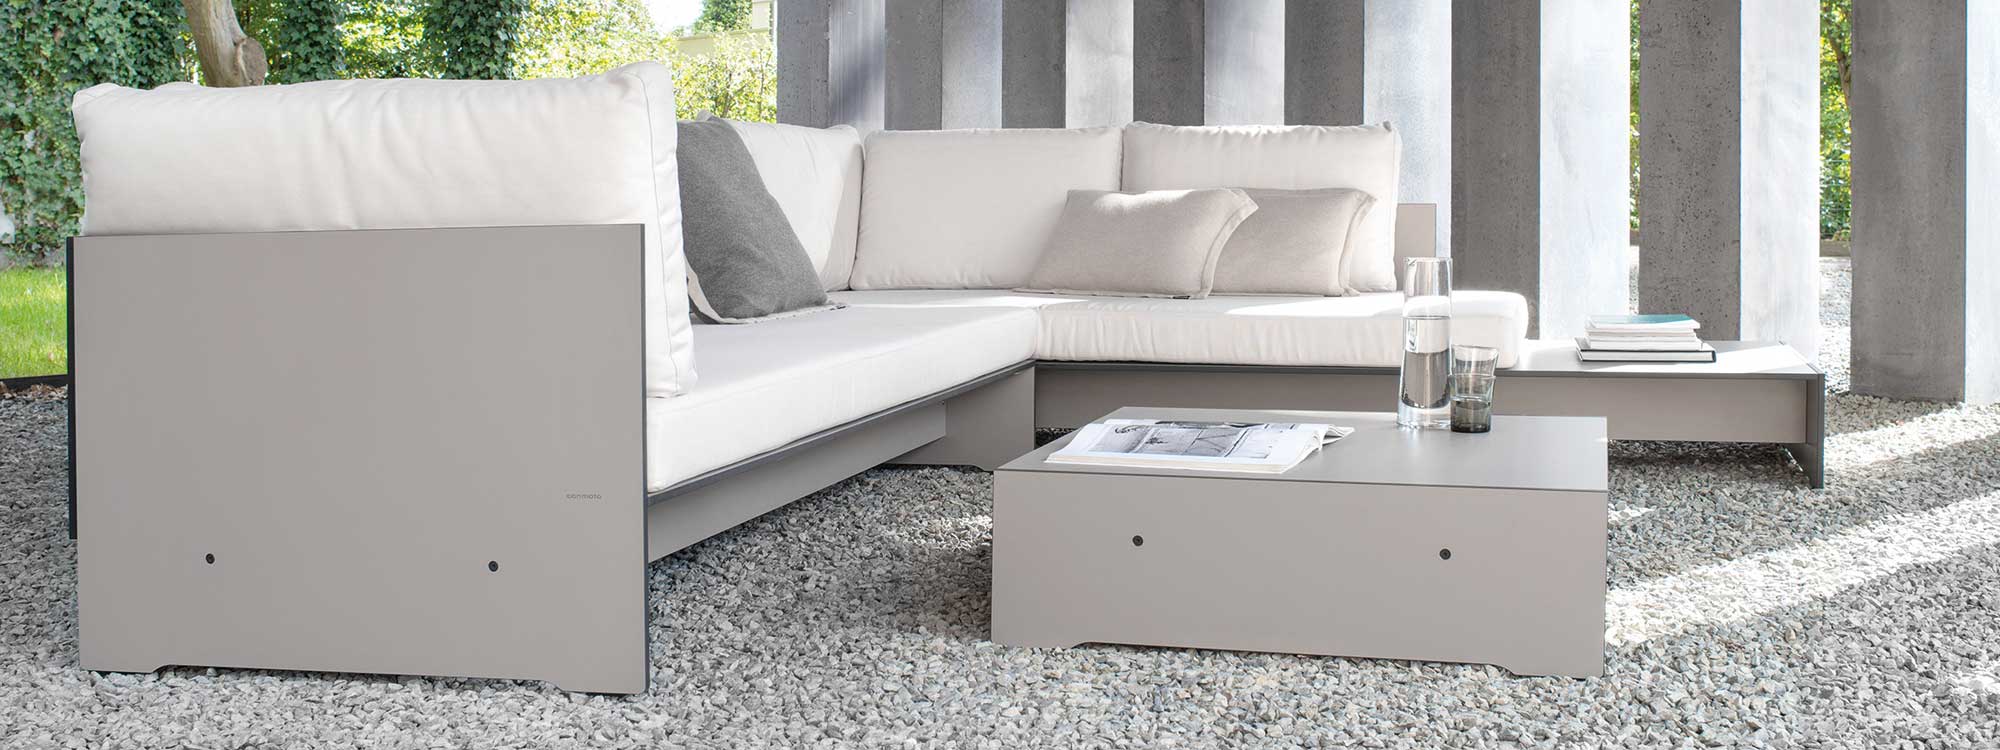 Image of Conmoto Riva modern garden corner sofa in taupe HPL, shown on gravel floor beneath geometric concrete structure